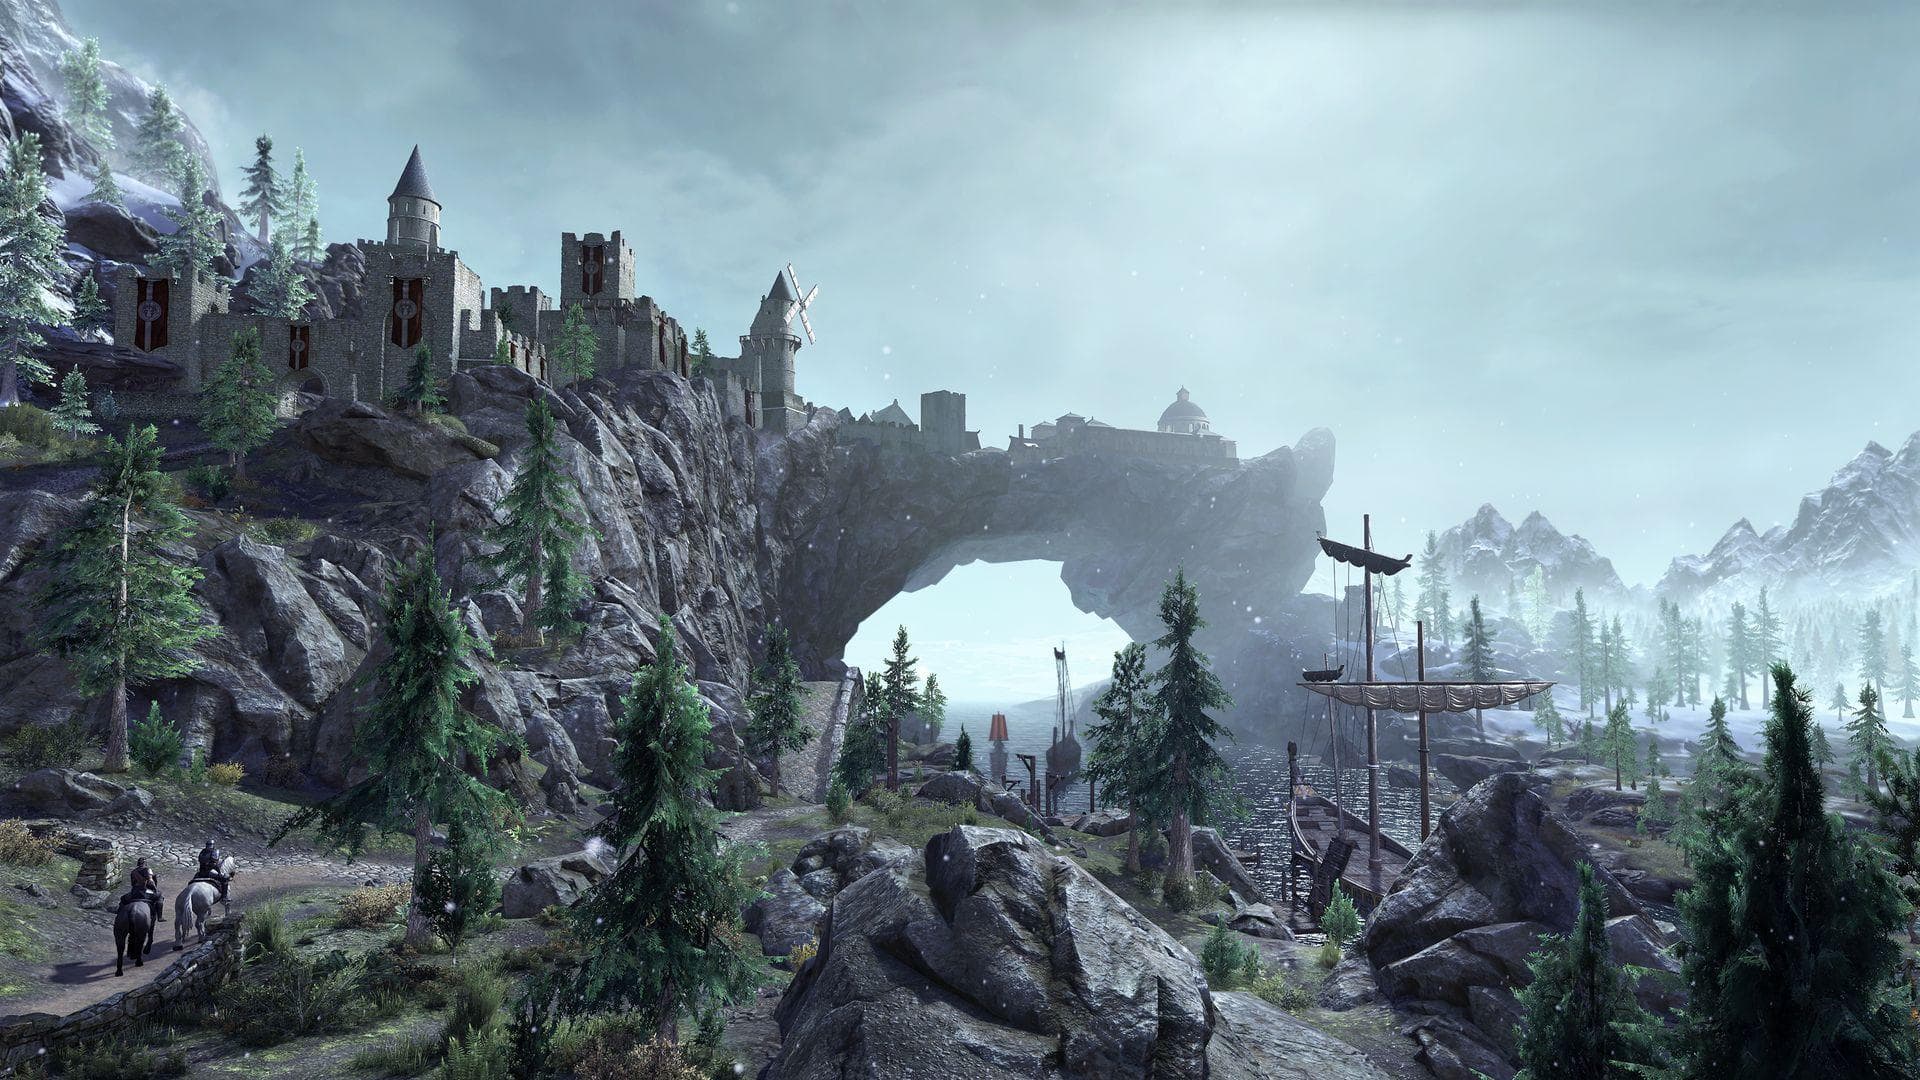 Greymoor S Western Skyrim Blackreach Bring All New Adventures The Elder Scrolls Online